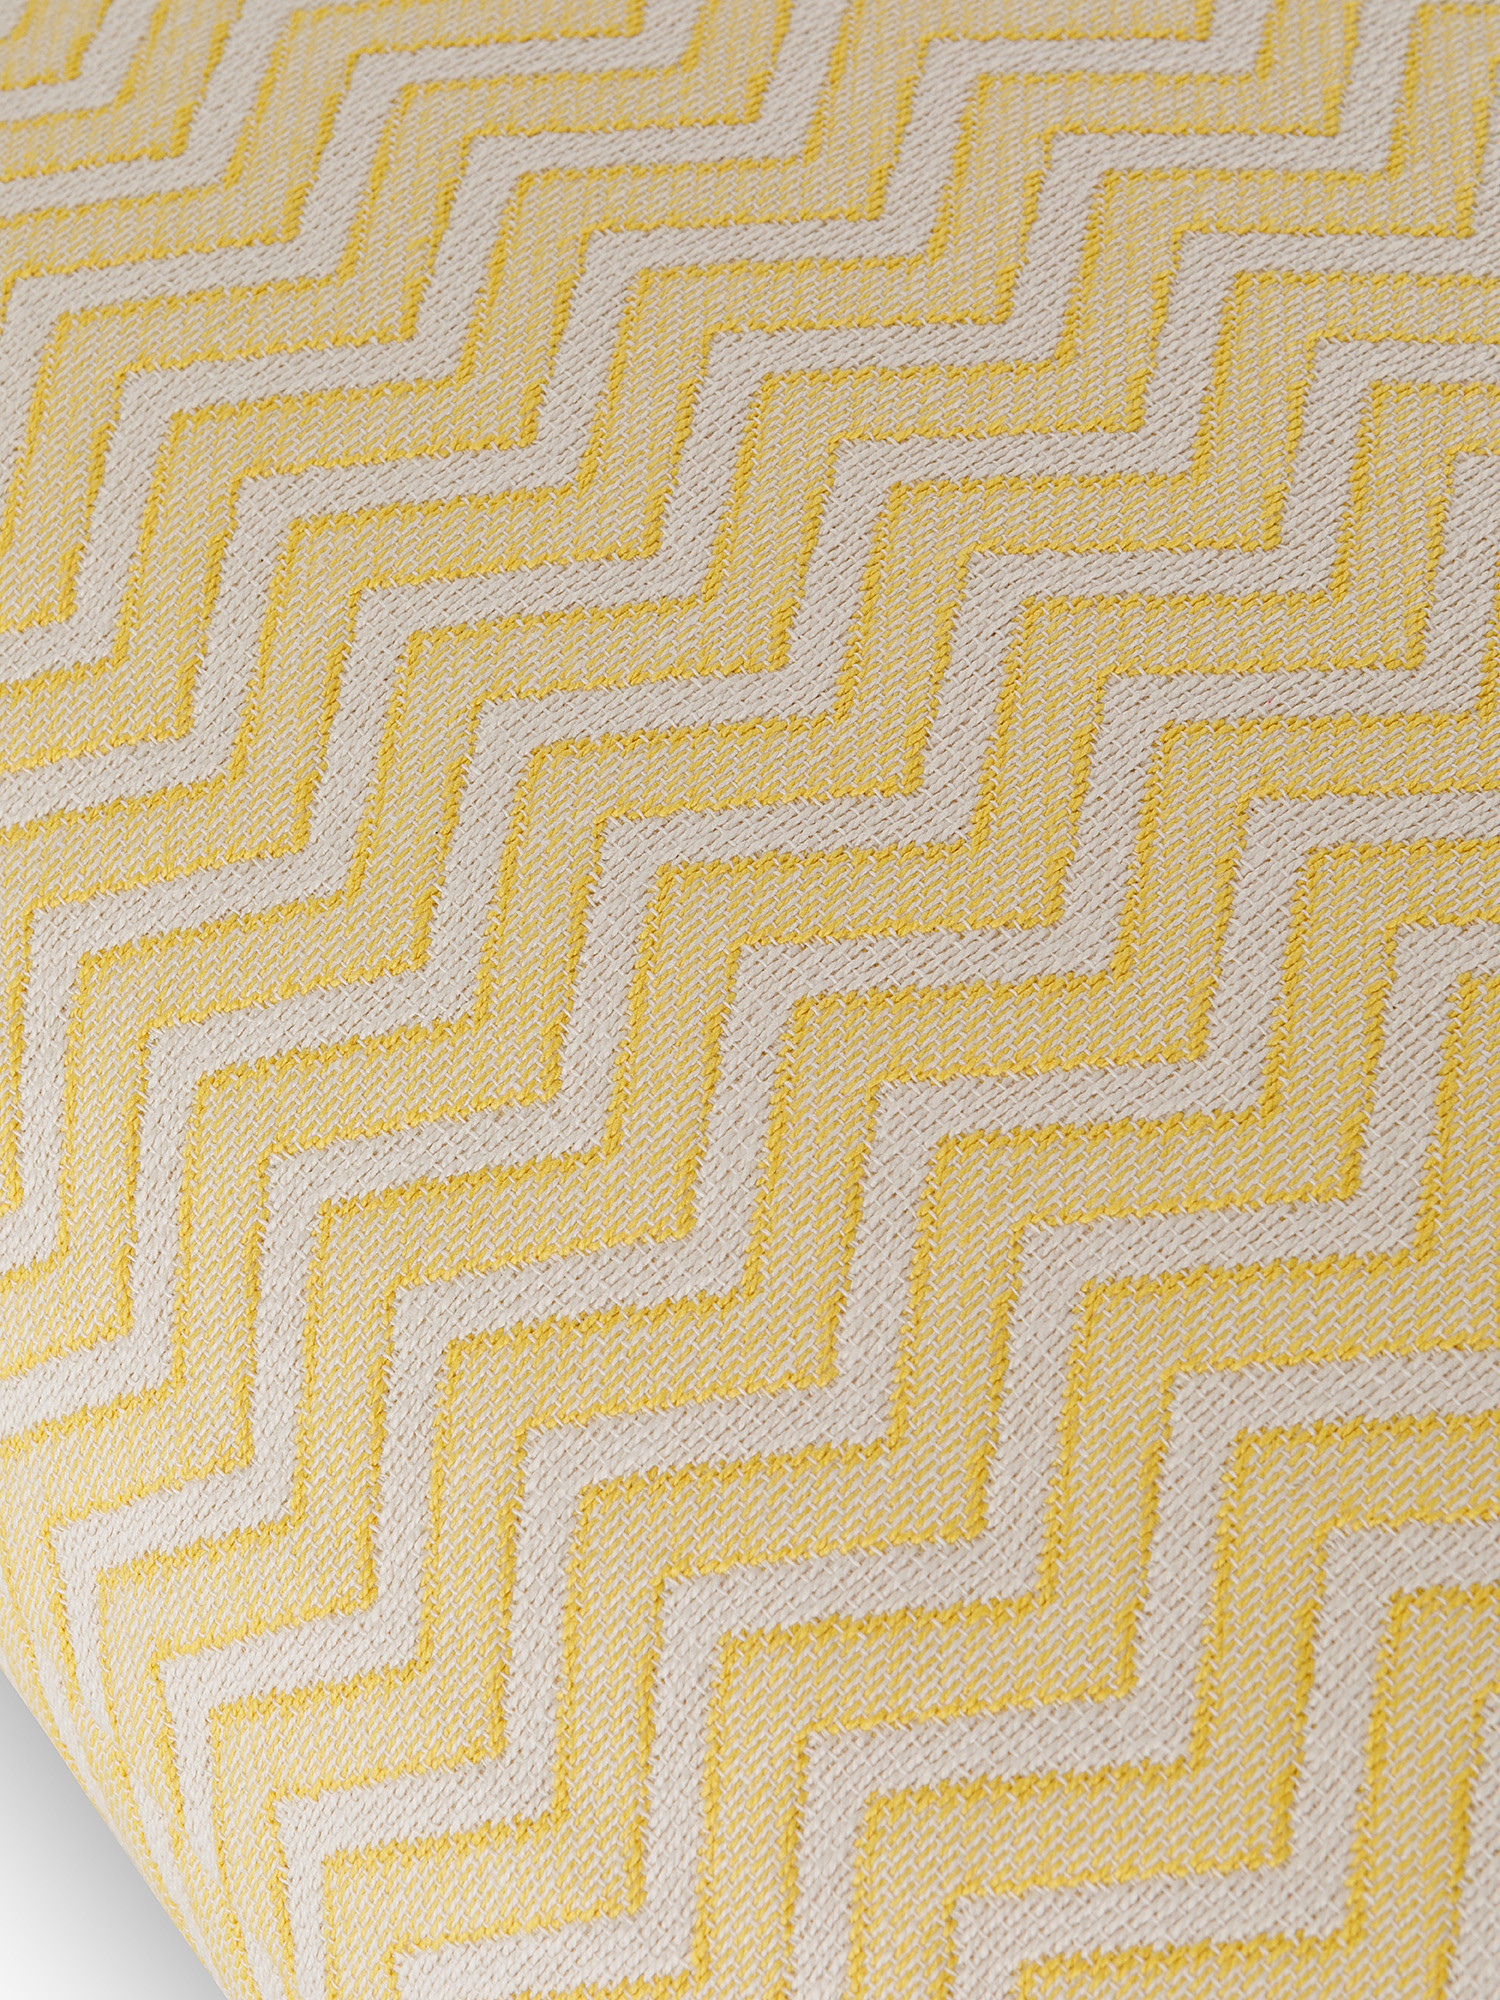 Jacquard cushion with zigzag motif 45x45cm, Yellow, large image number 1